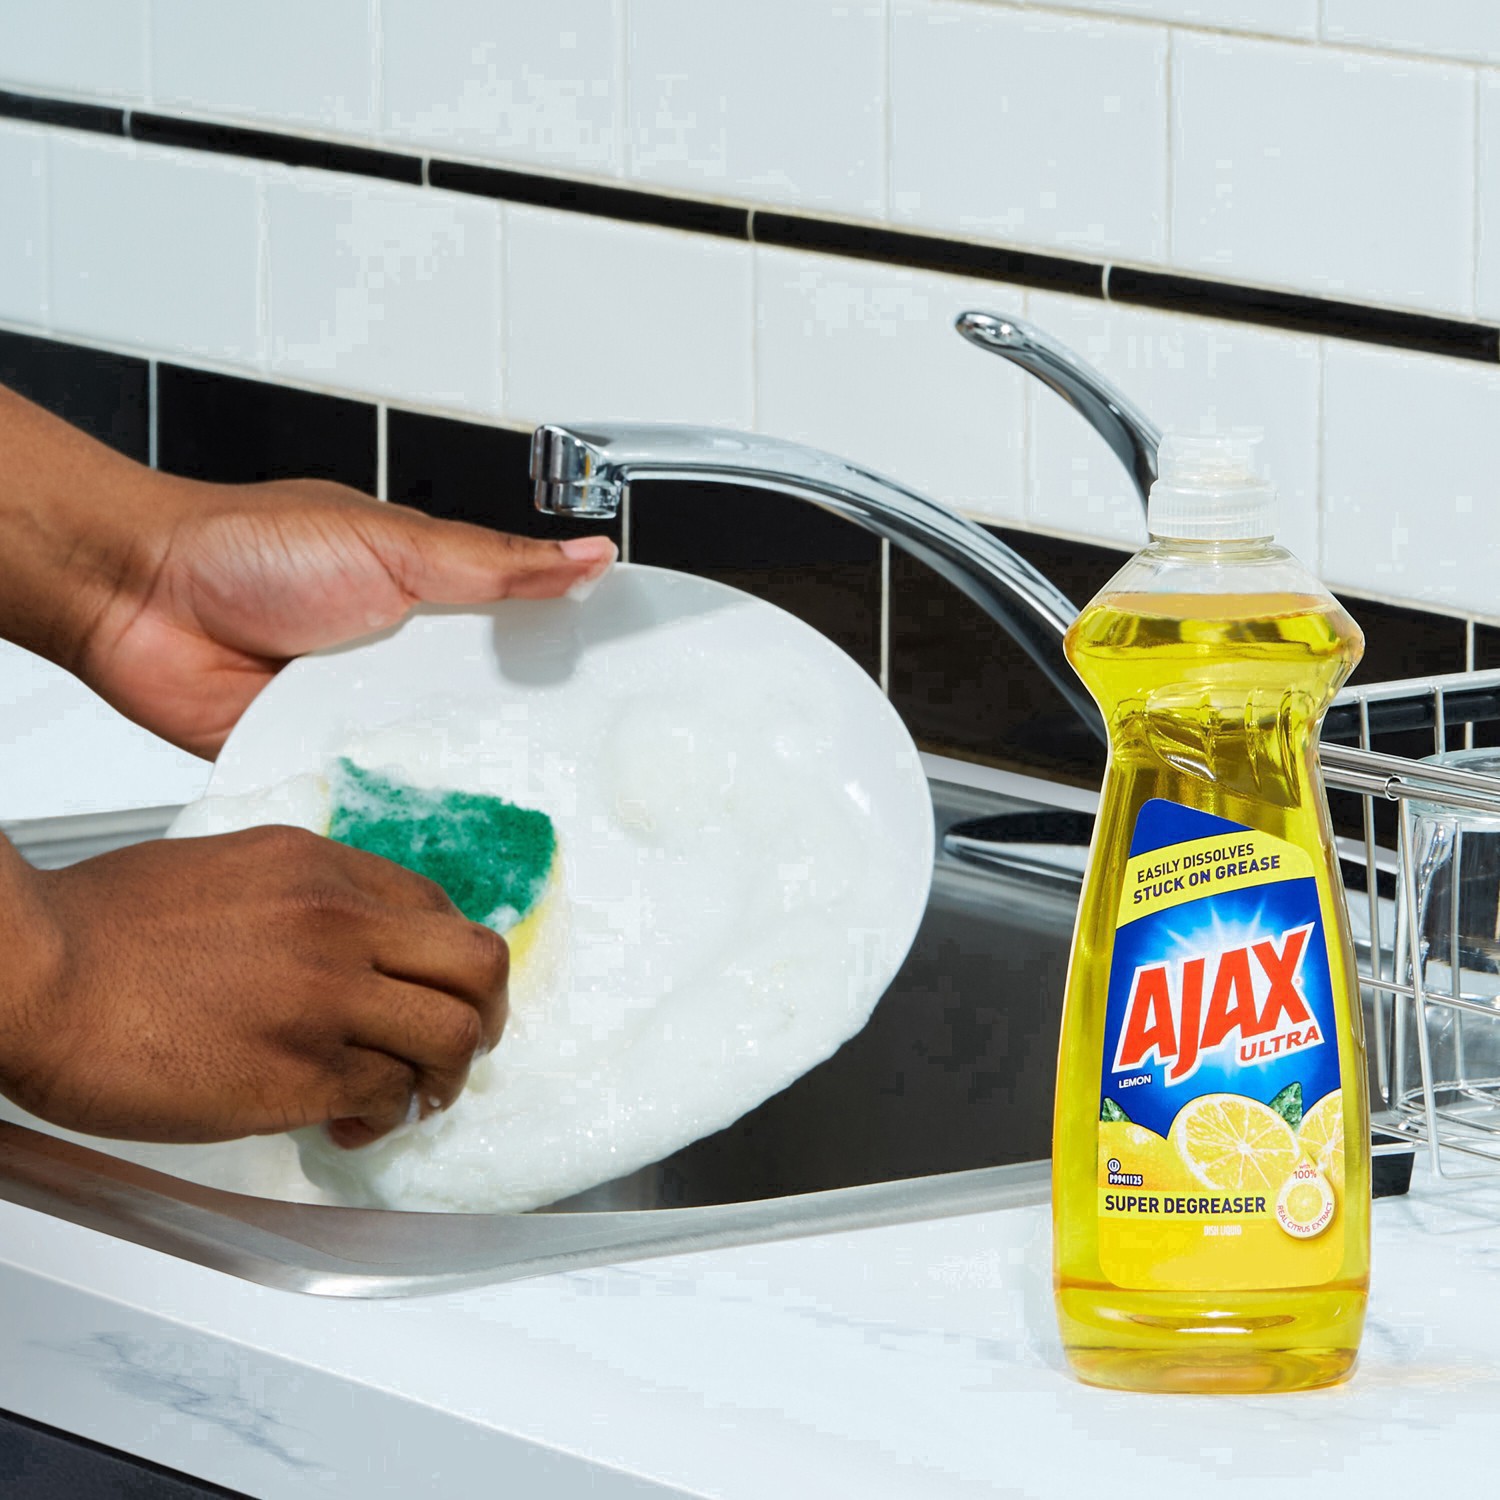 slide 100 of 118, Ajax Ultra Lemon Super Degreaser Dish Liquid, 28 fl oz